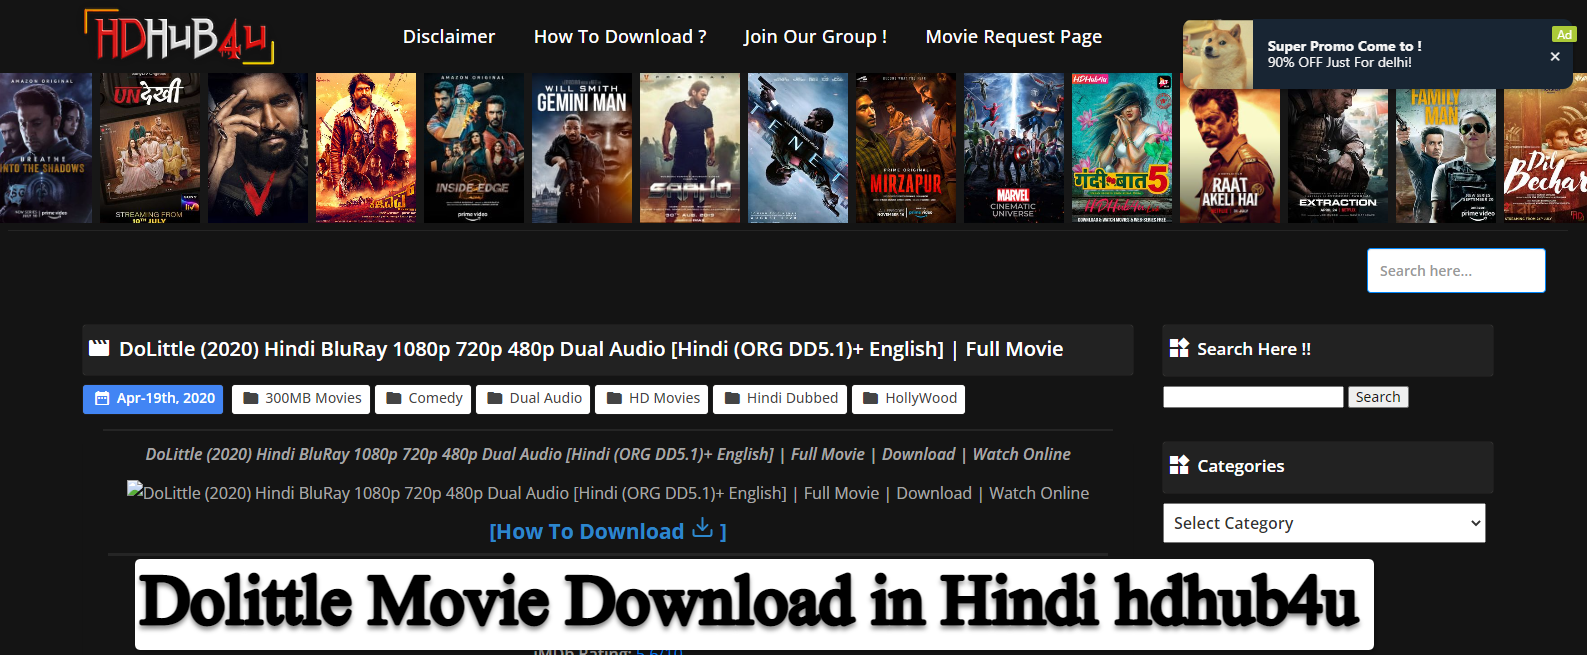 Dolittle Movie Download, 720p, 480p, 1080p, Full HD Hindi-dubbed Free hdhub4u